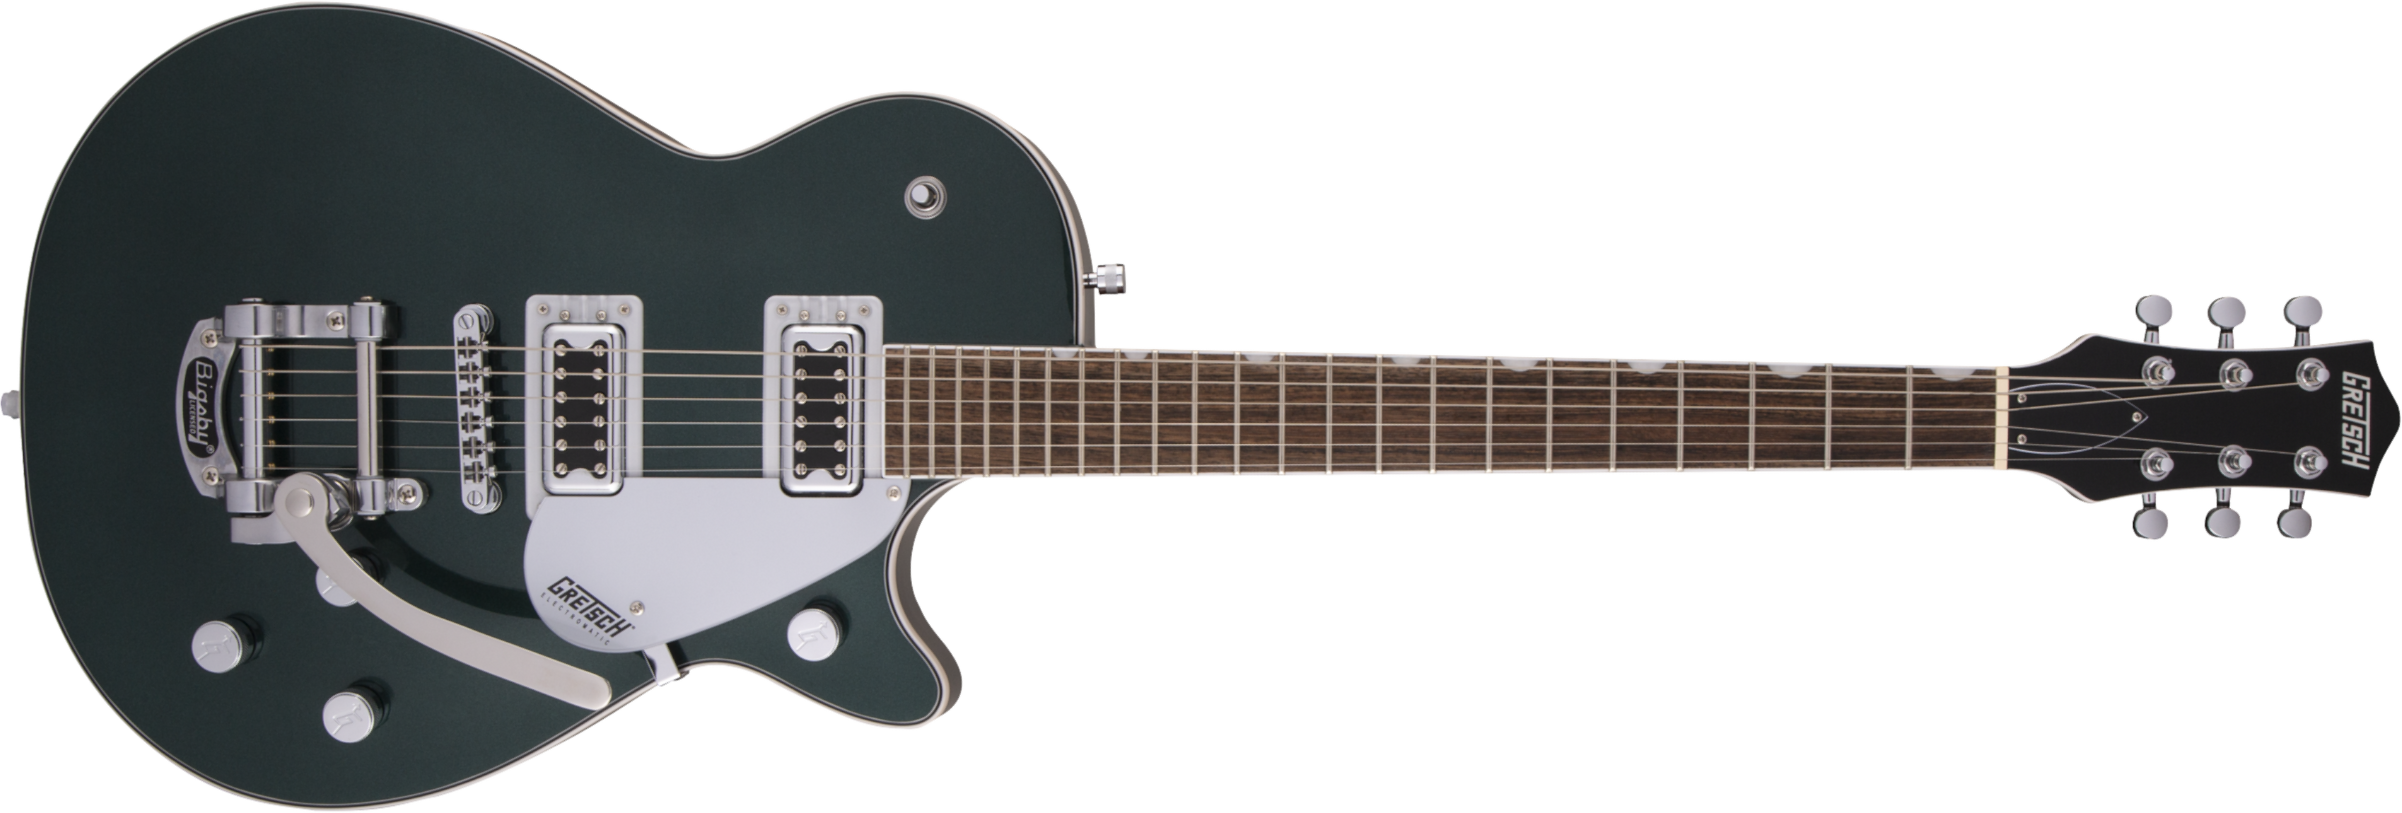 Gretsch G5230t Electromatic Jet Ft Single-cut Bigsby 2h Trem Lau - Cadillac Green - Enkel gesneden elektrische gitaar - Main picture